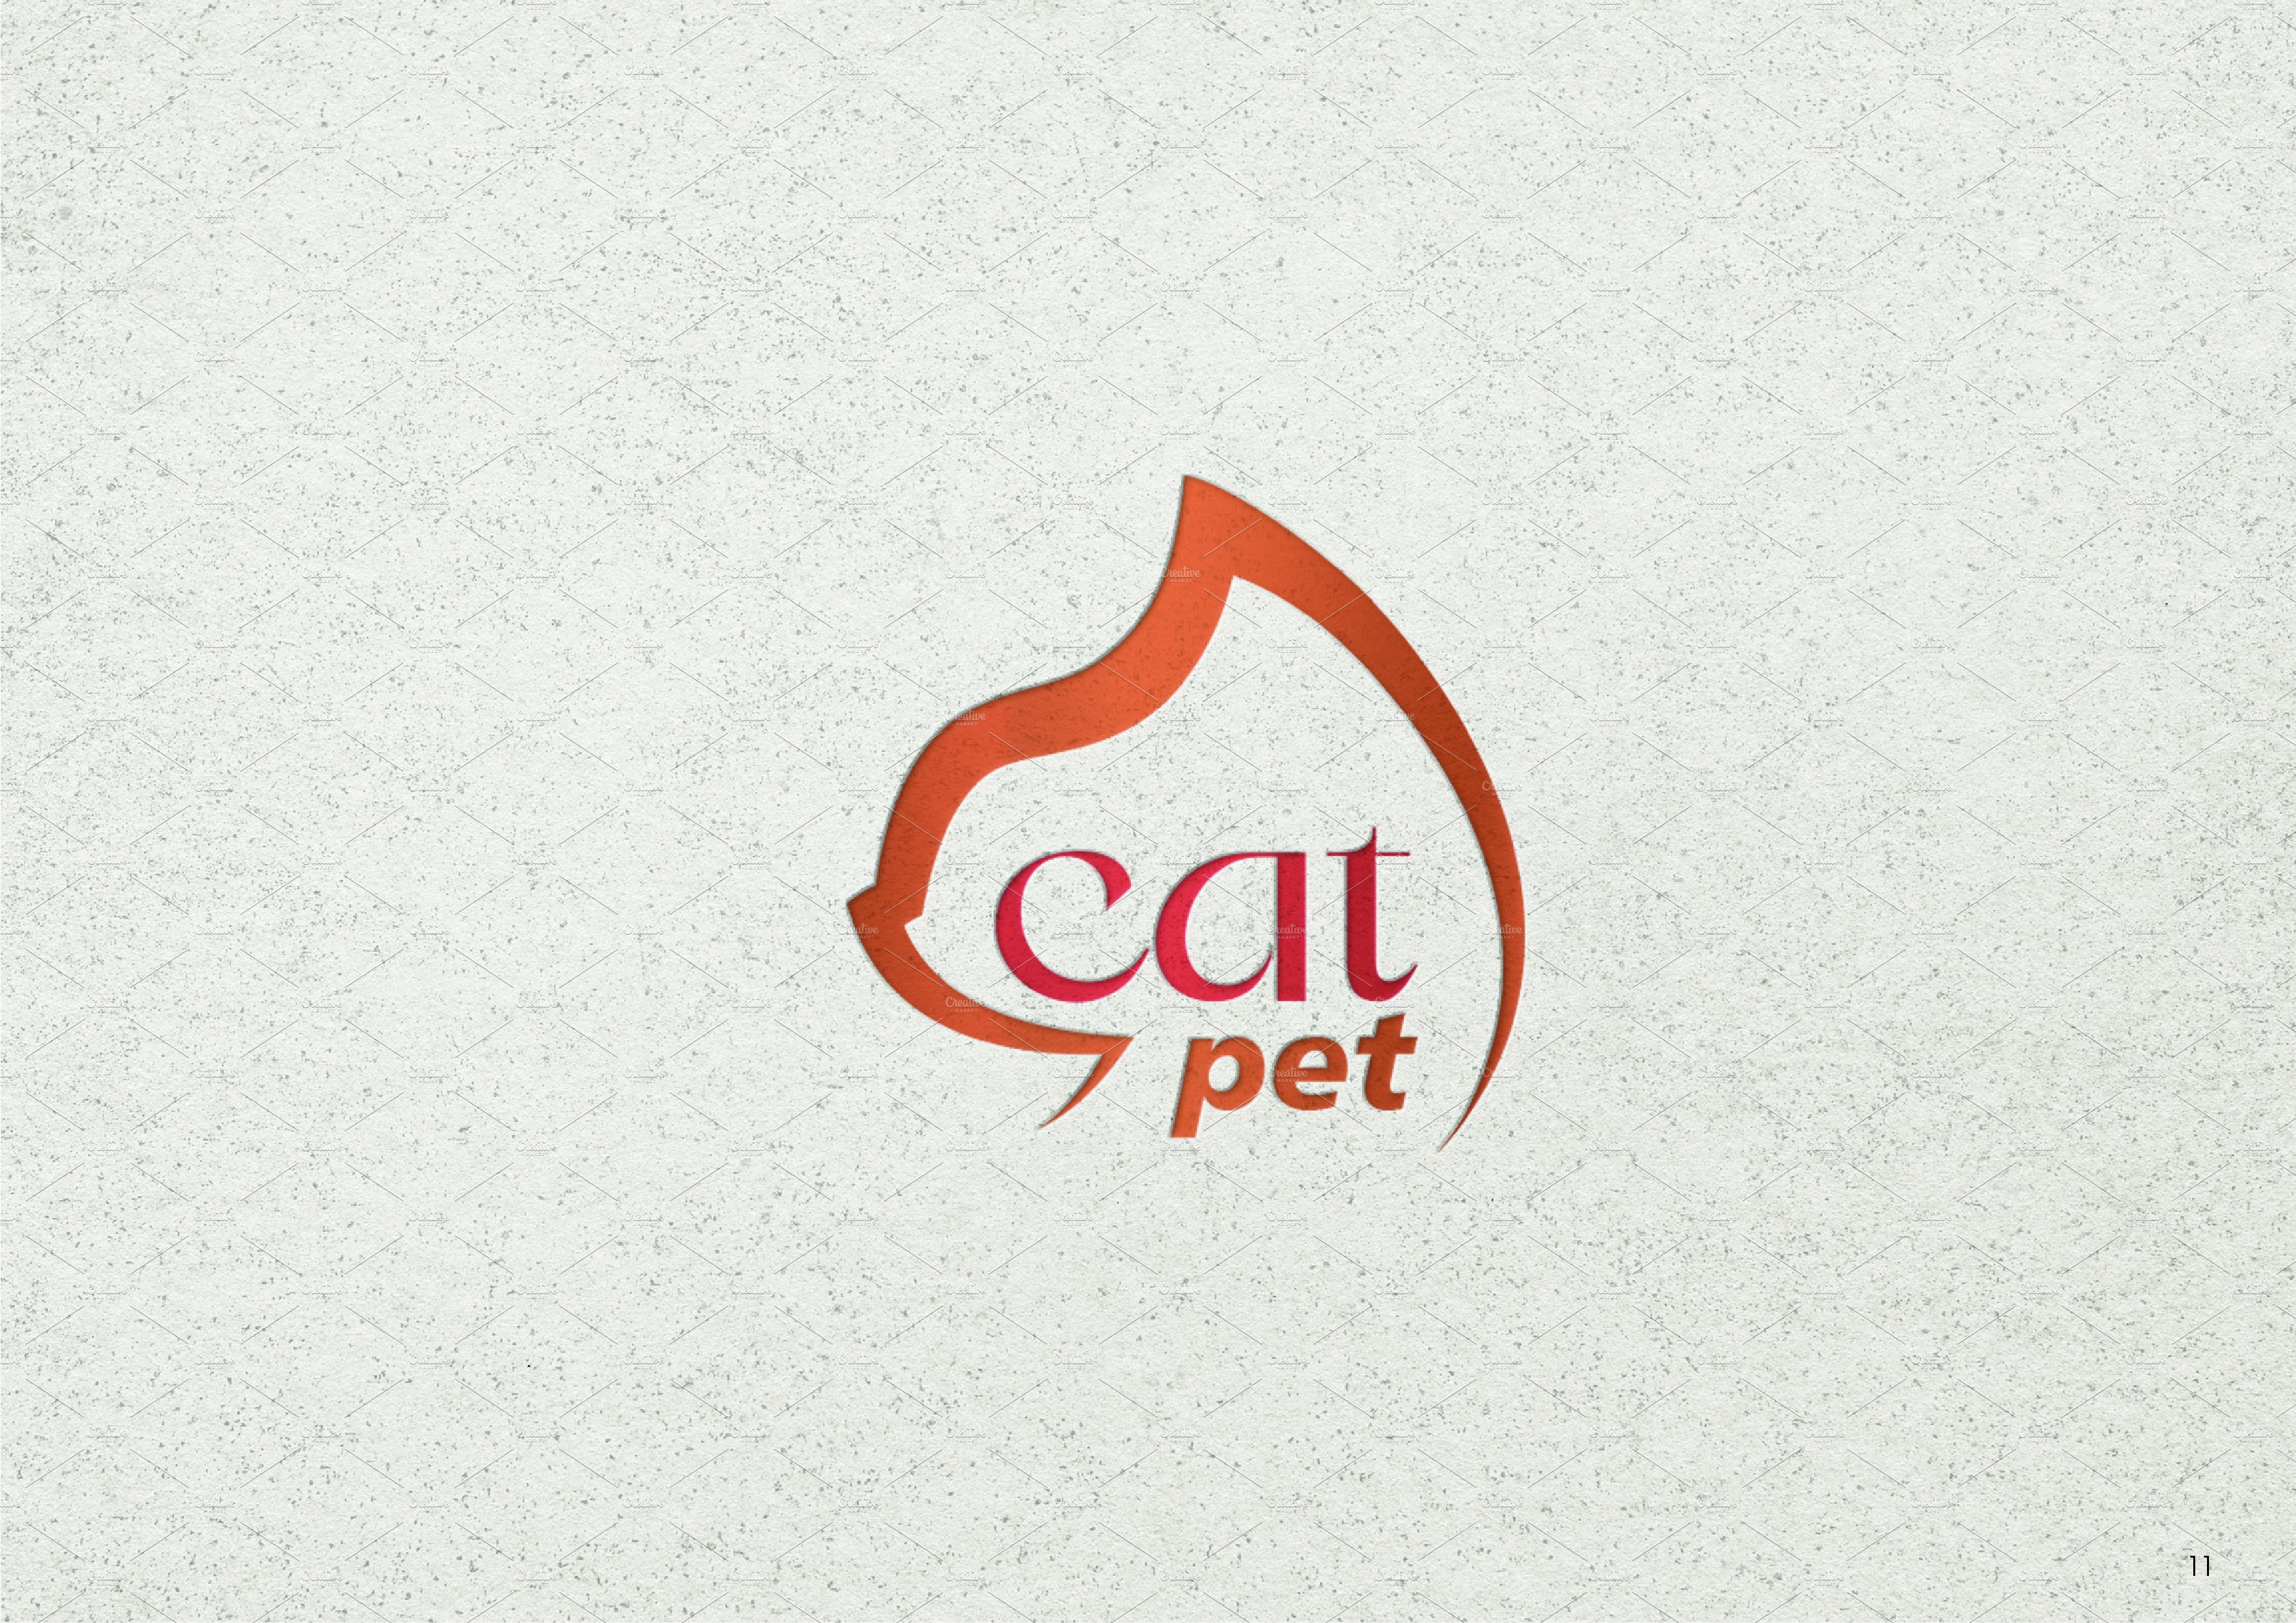 Cat pet Logo cover image.